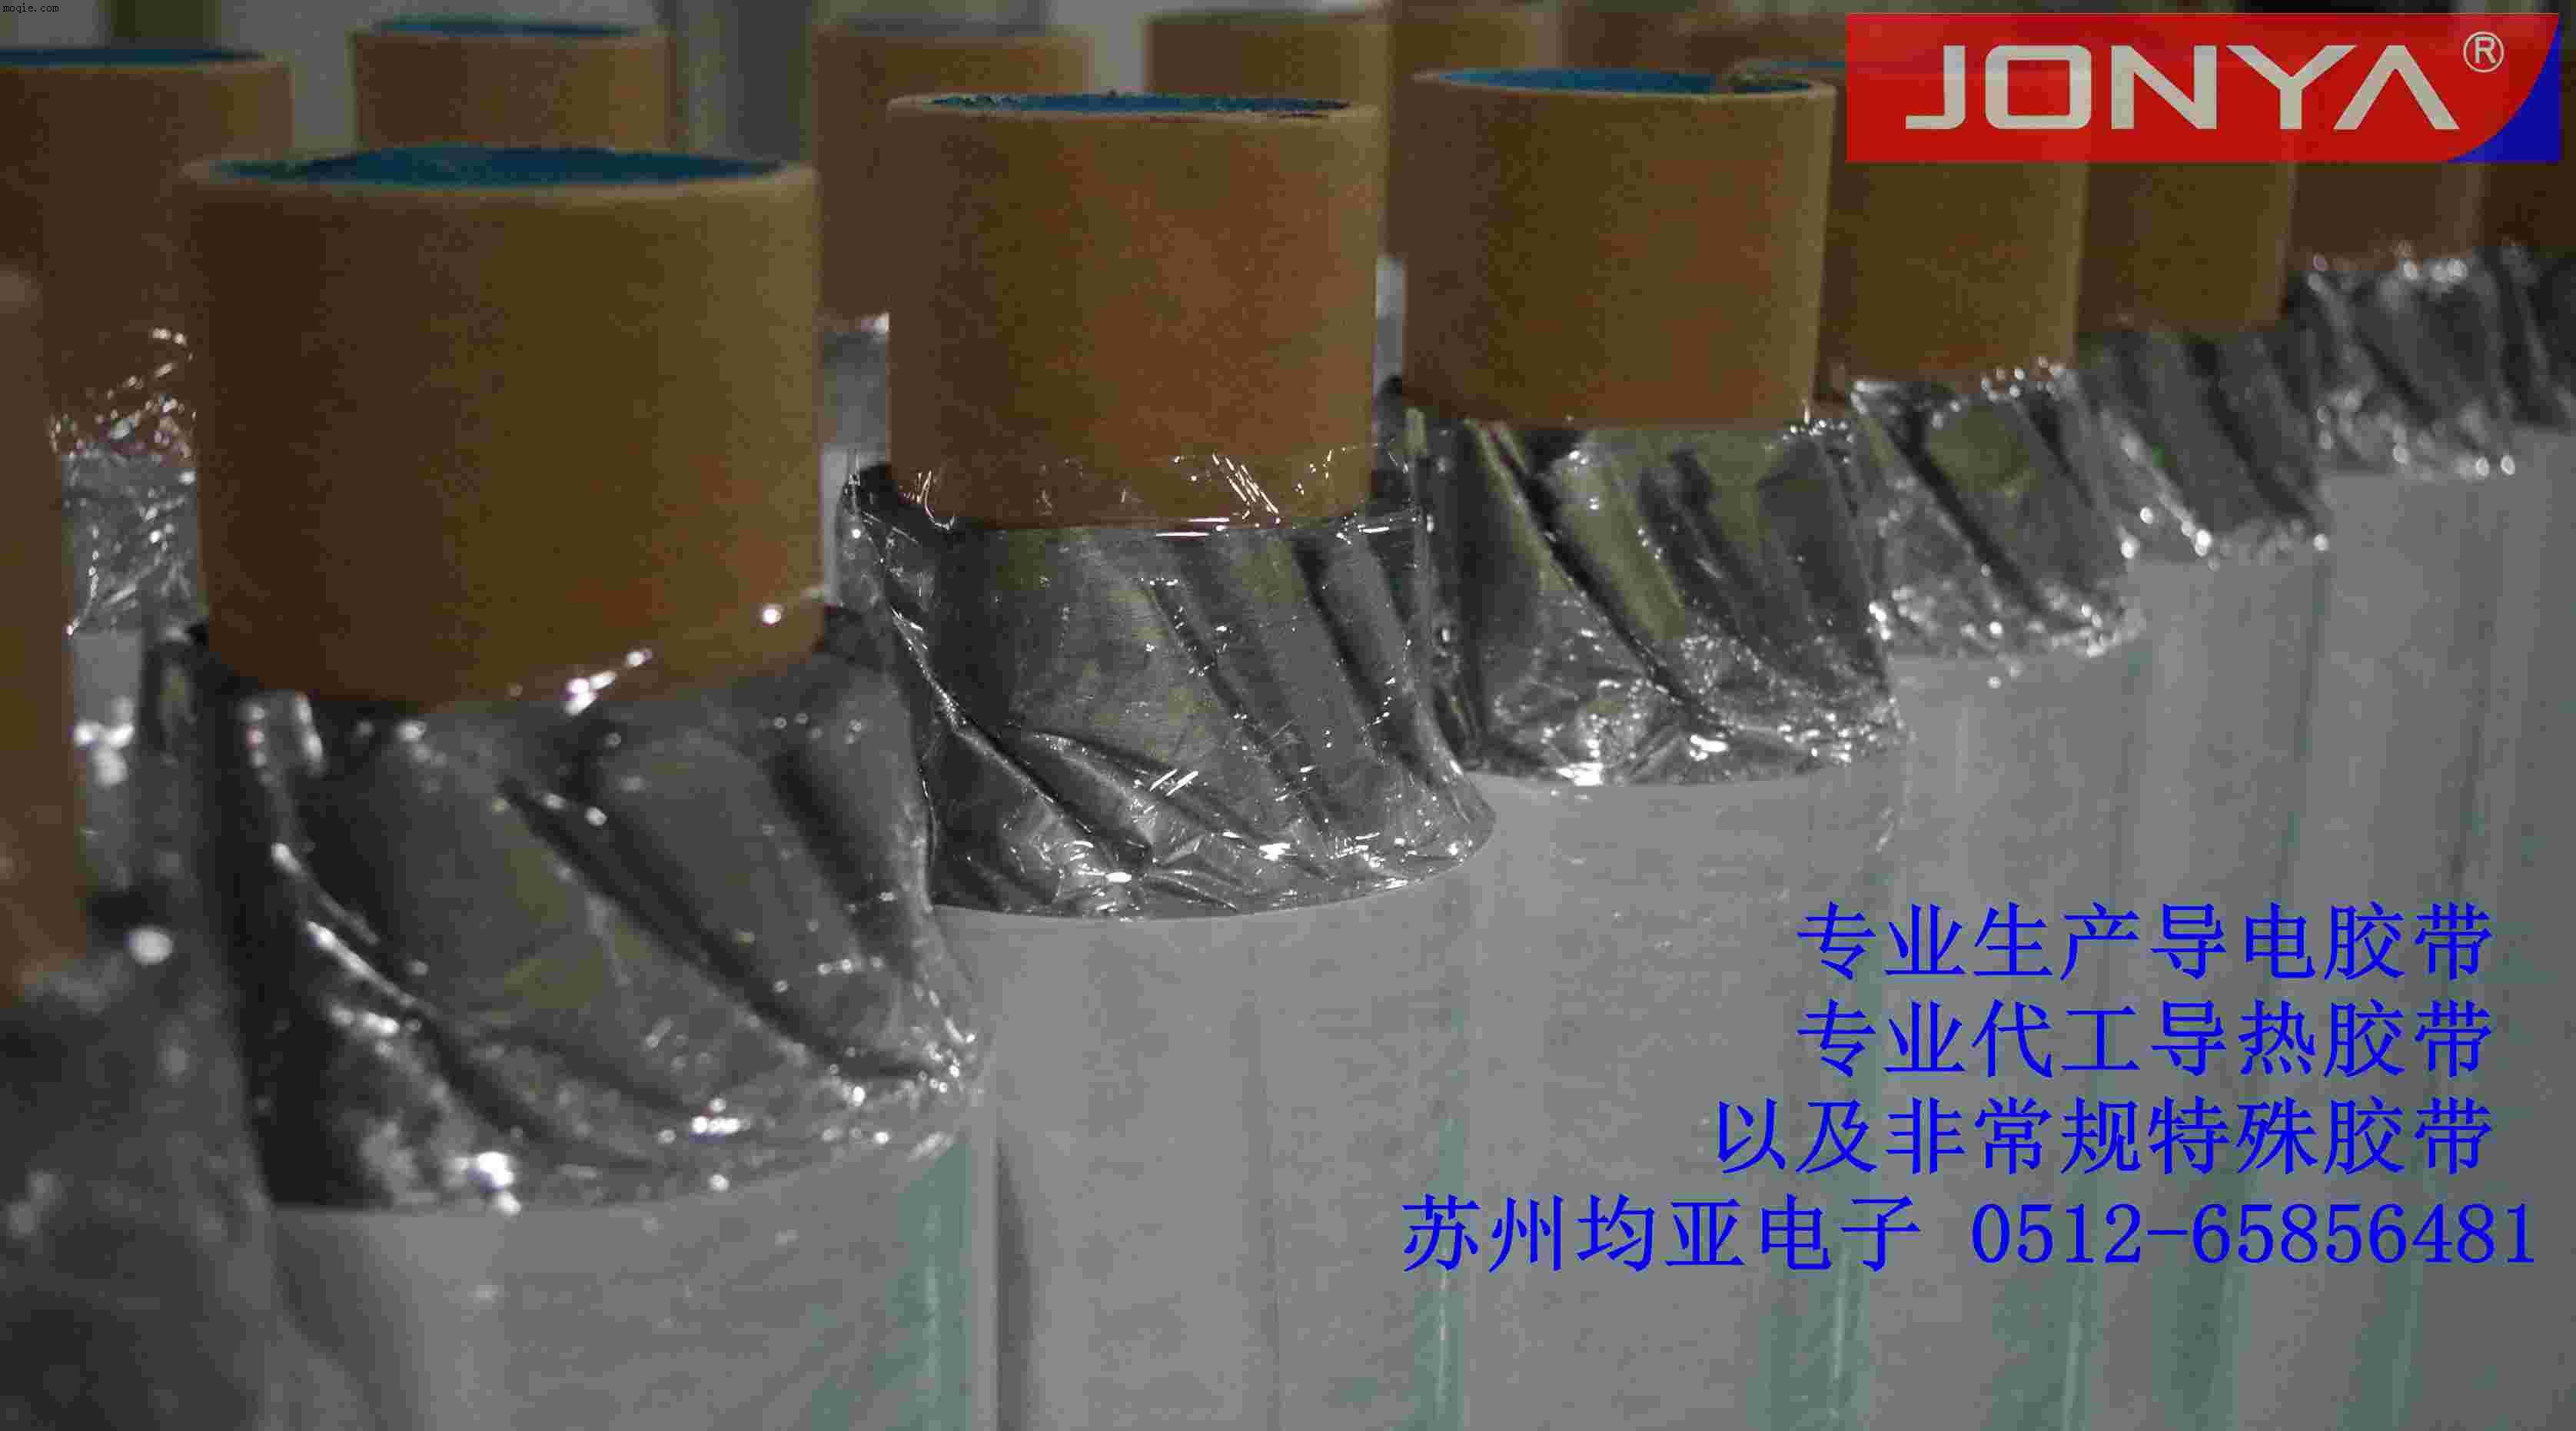 JONYA耐高温可过回流焊导电胶带FPC专用